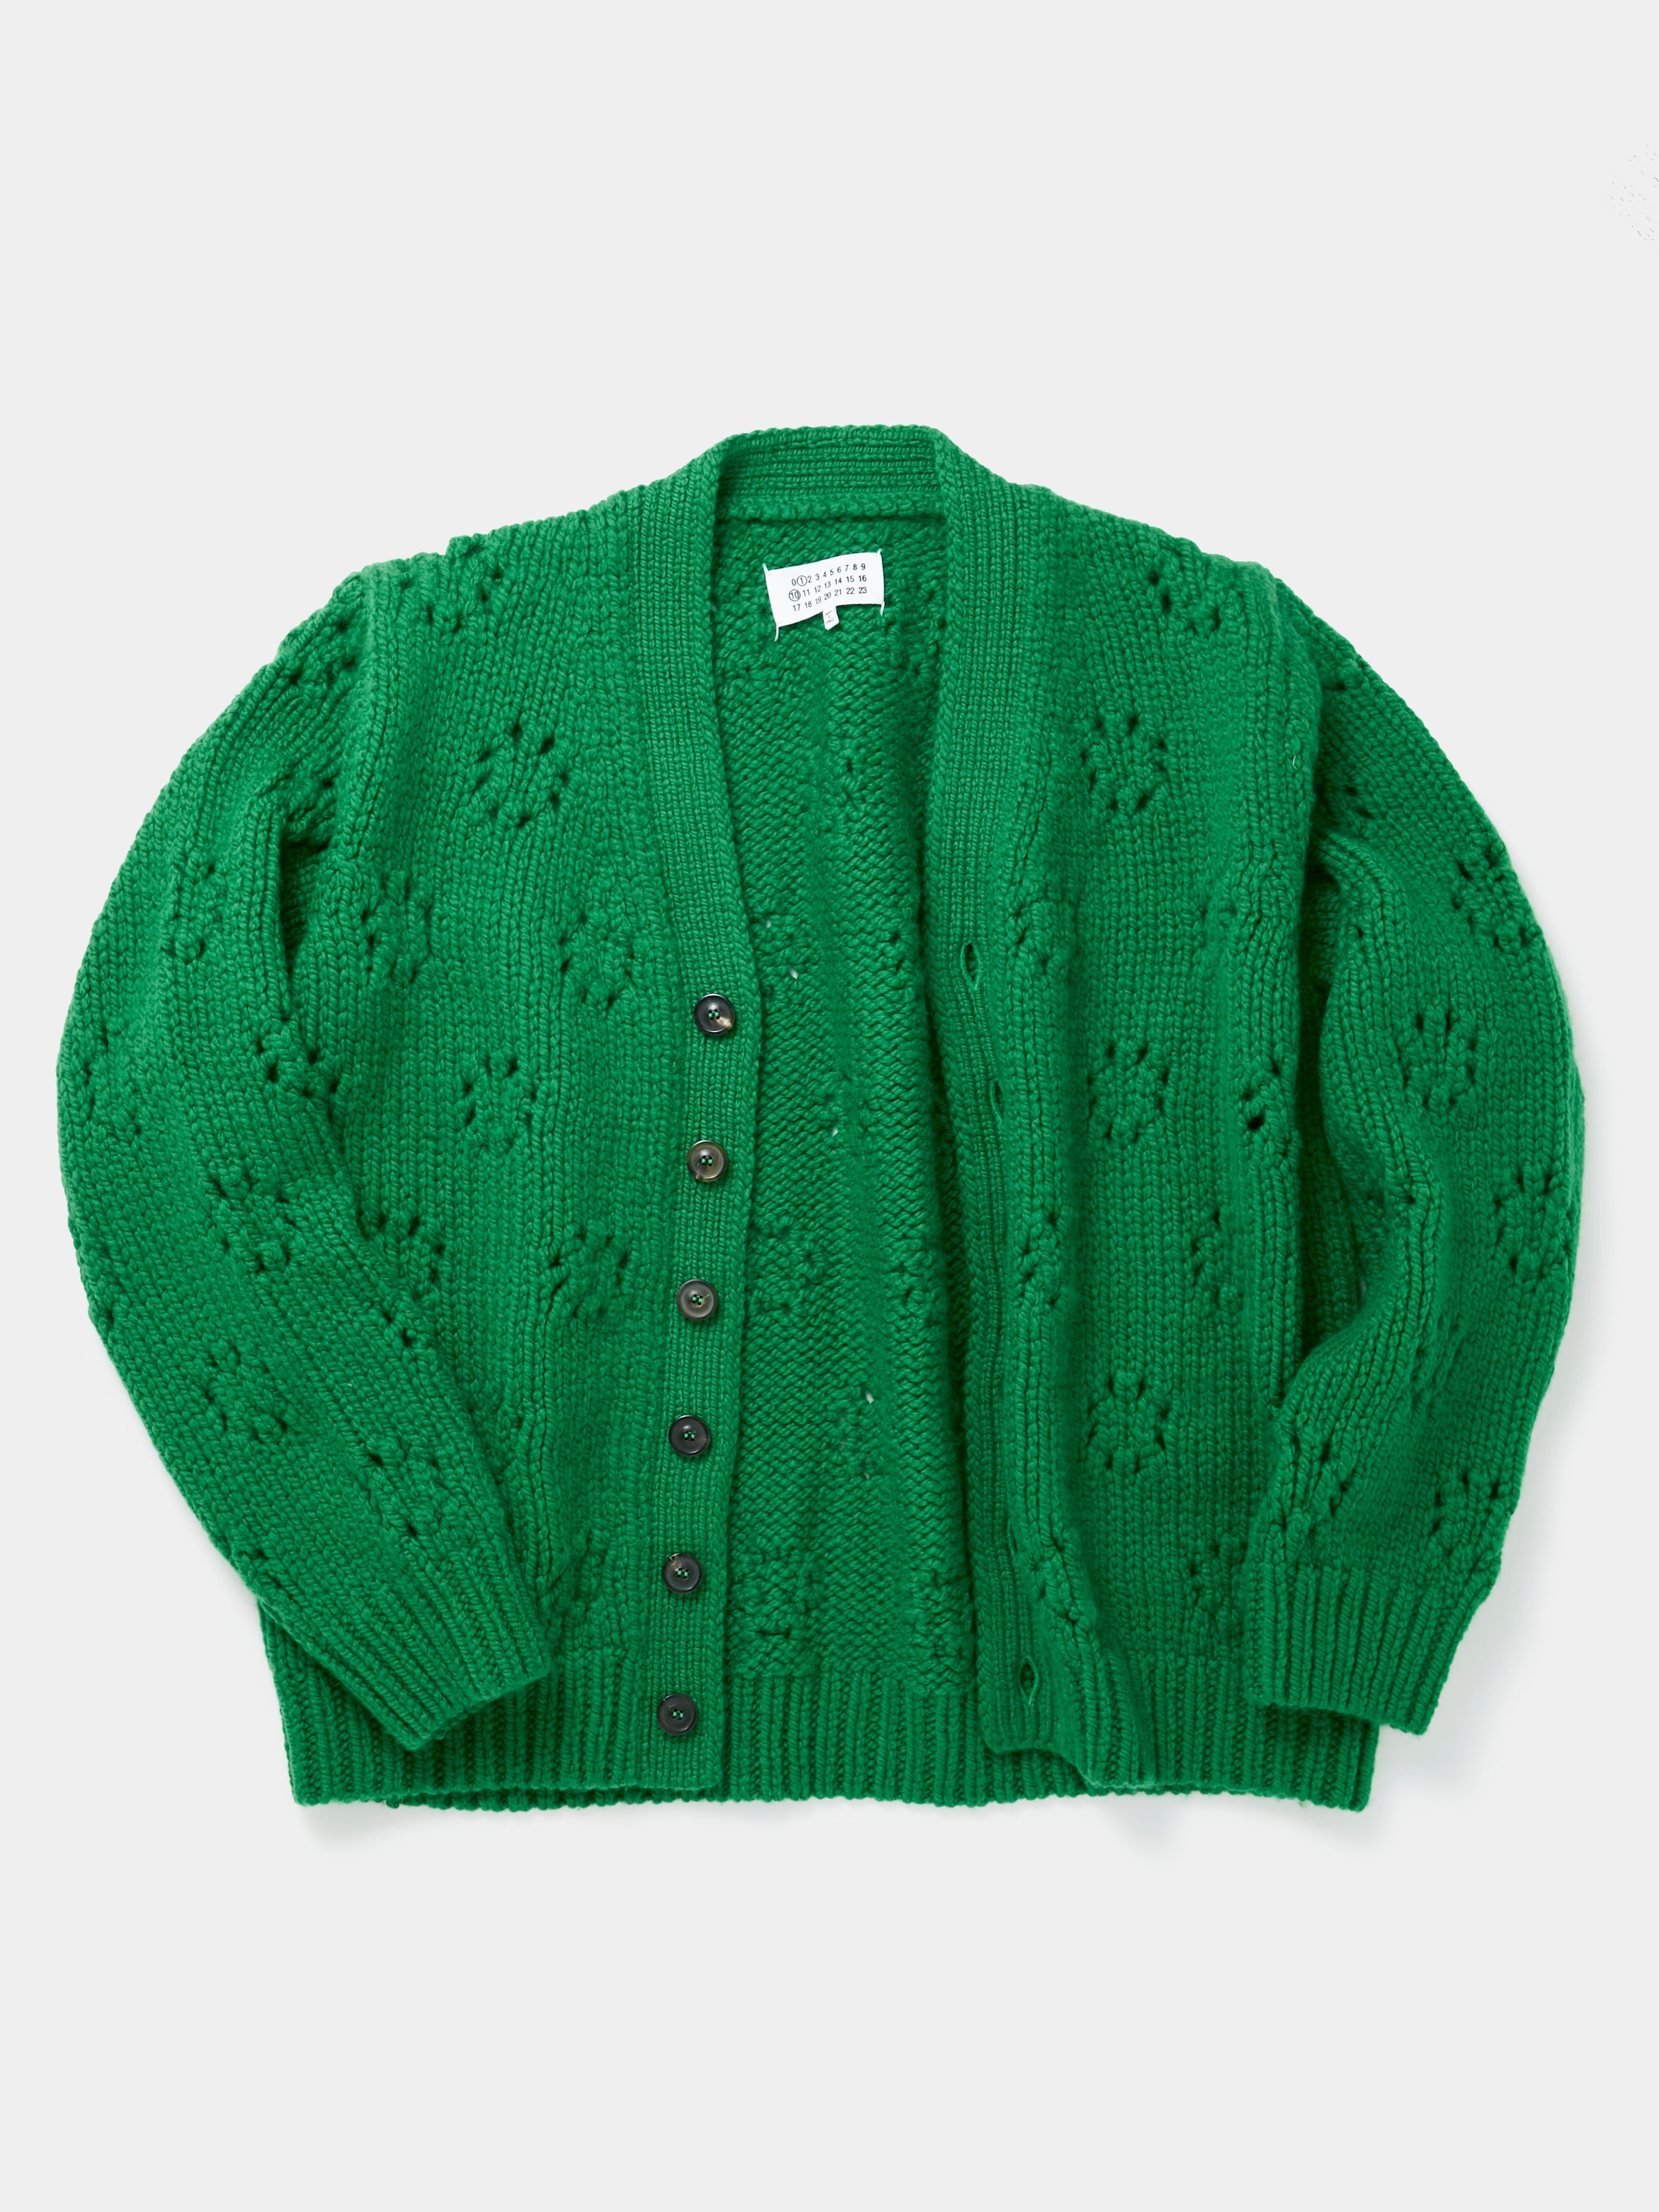 Childish Stitched Cardigan (Bright Green)